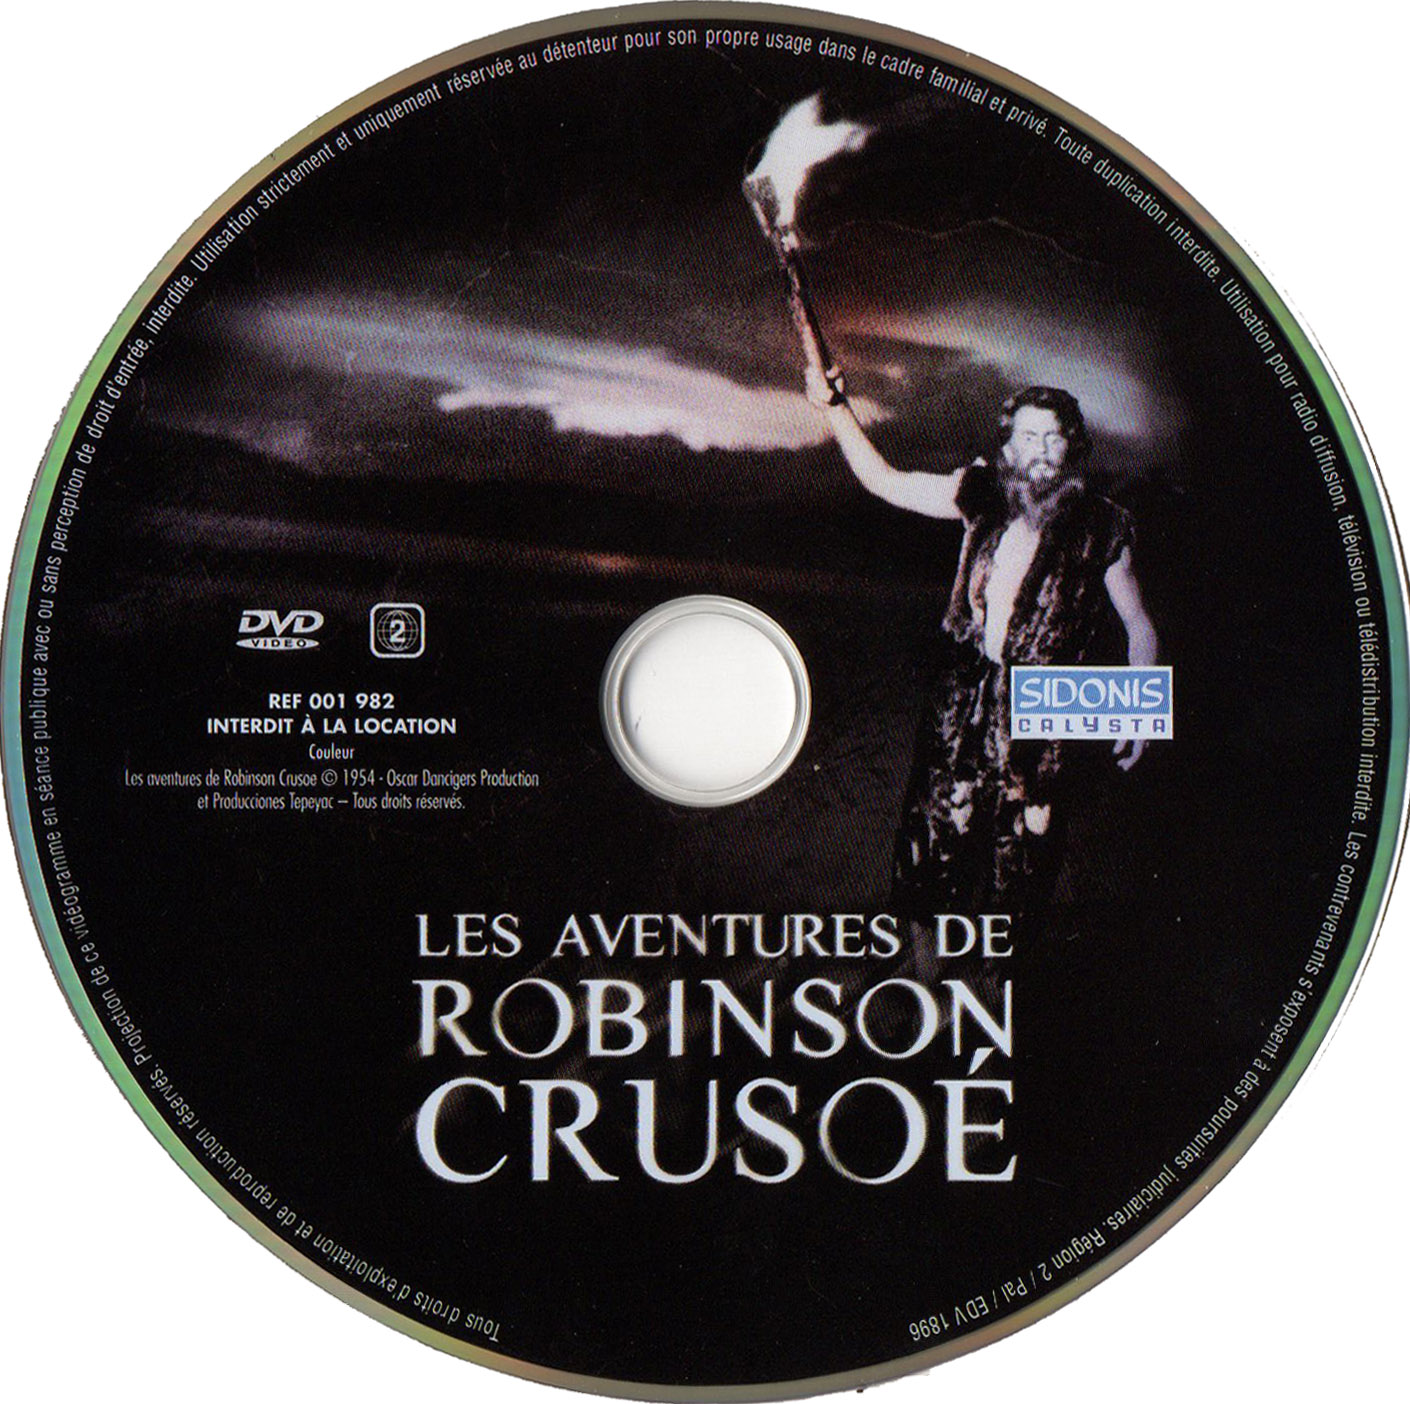 Les aventures de Robinson Crusoe